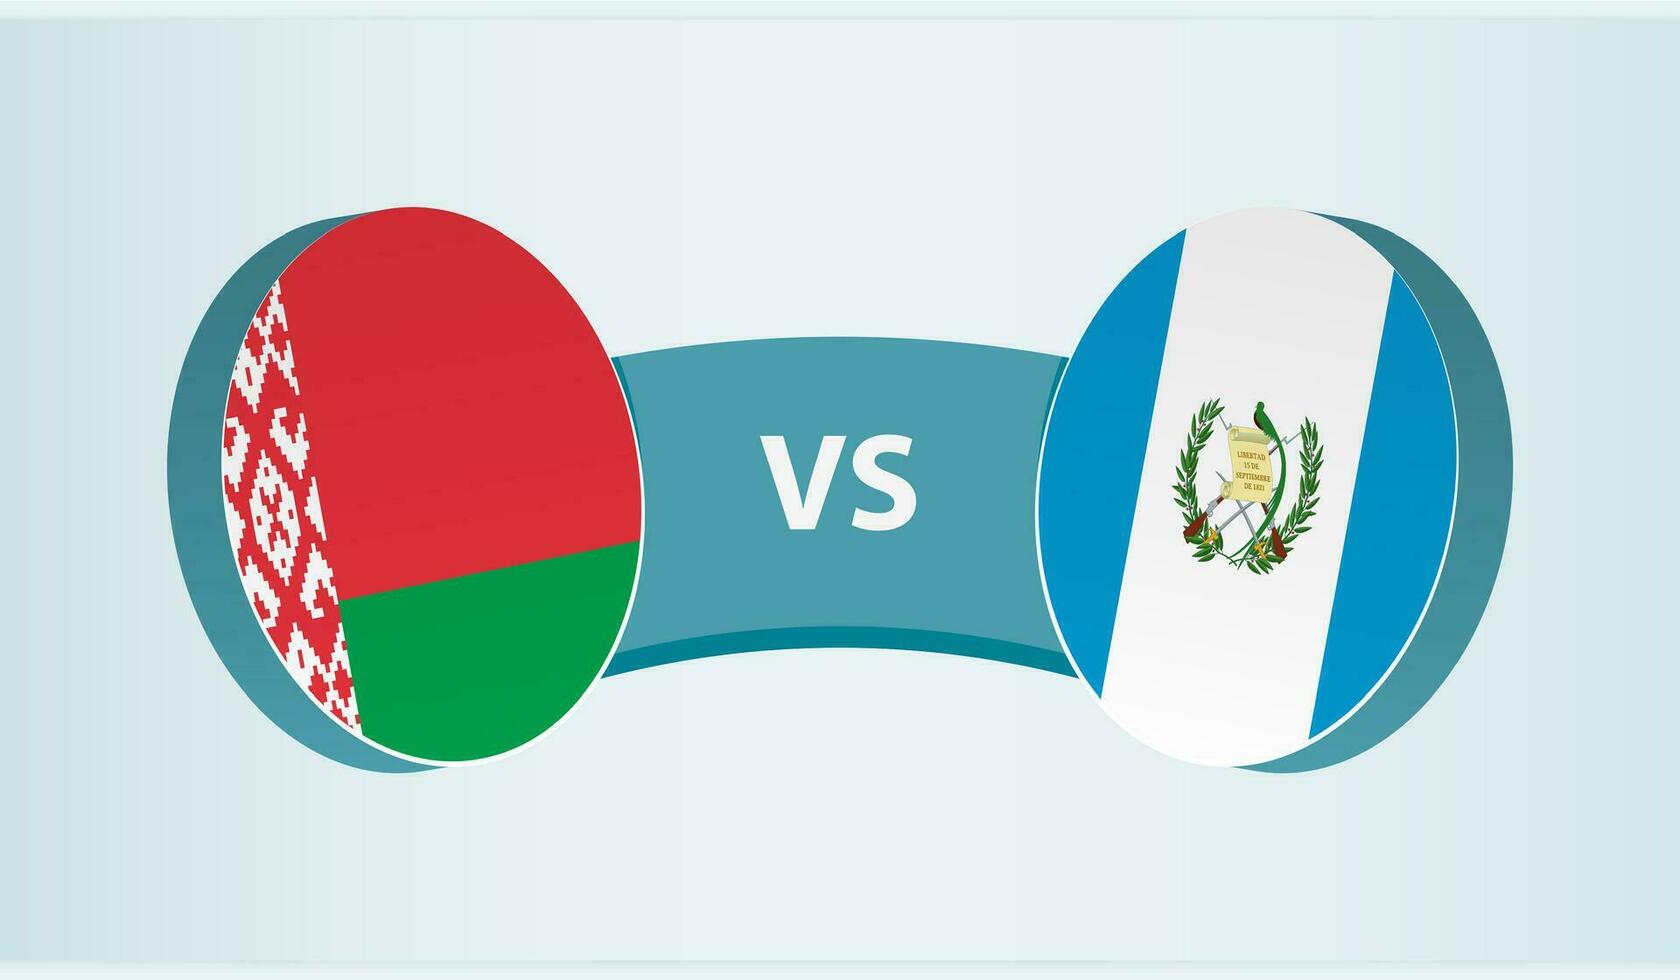 Belarus versus Guatemala, team sports competition concept. vector